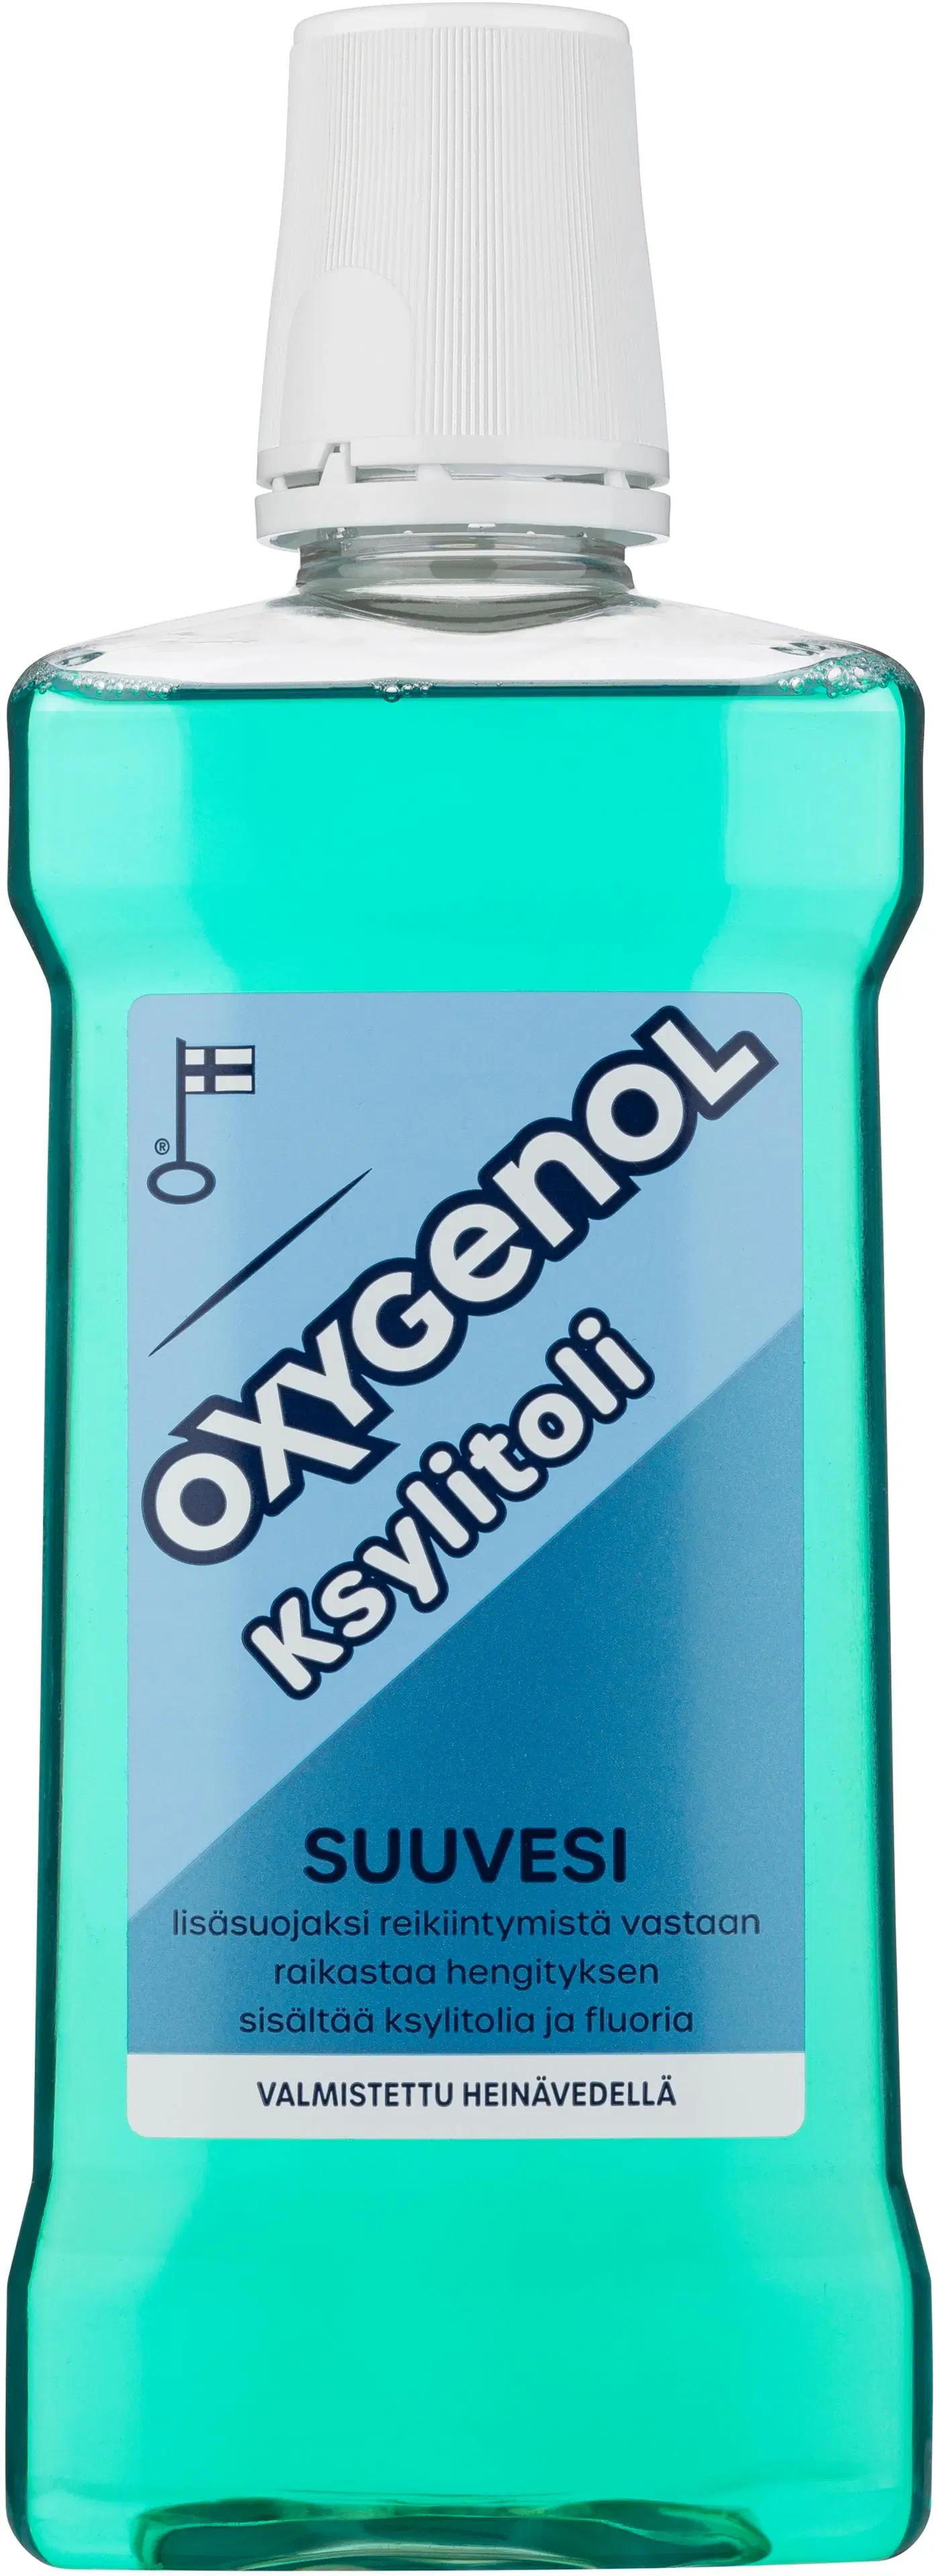 Oxygenol 500ml Ksylitoli suuvesi